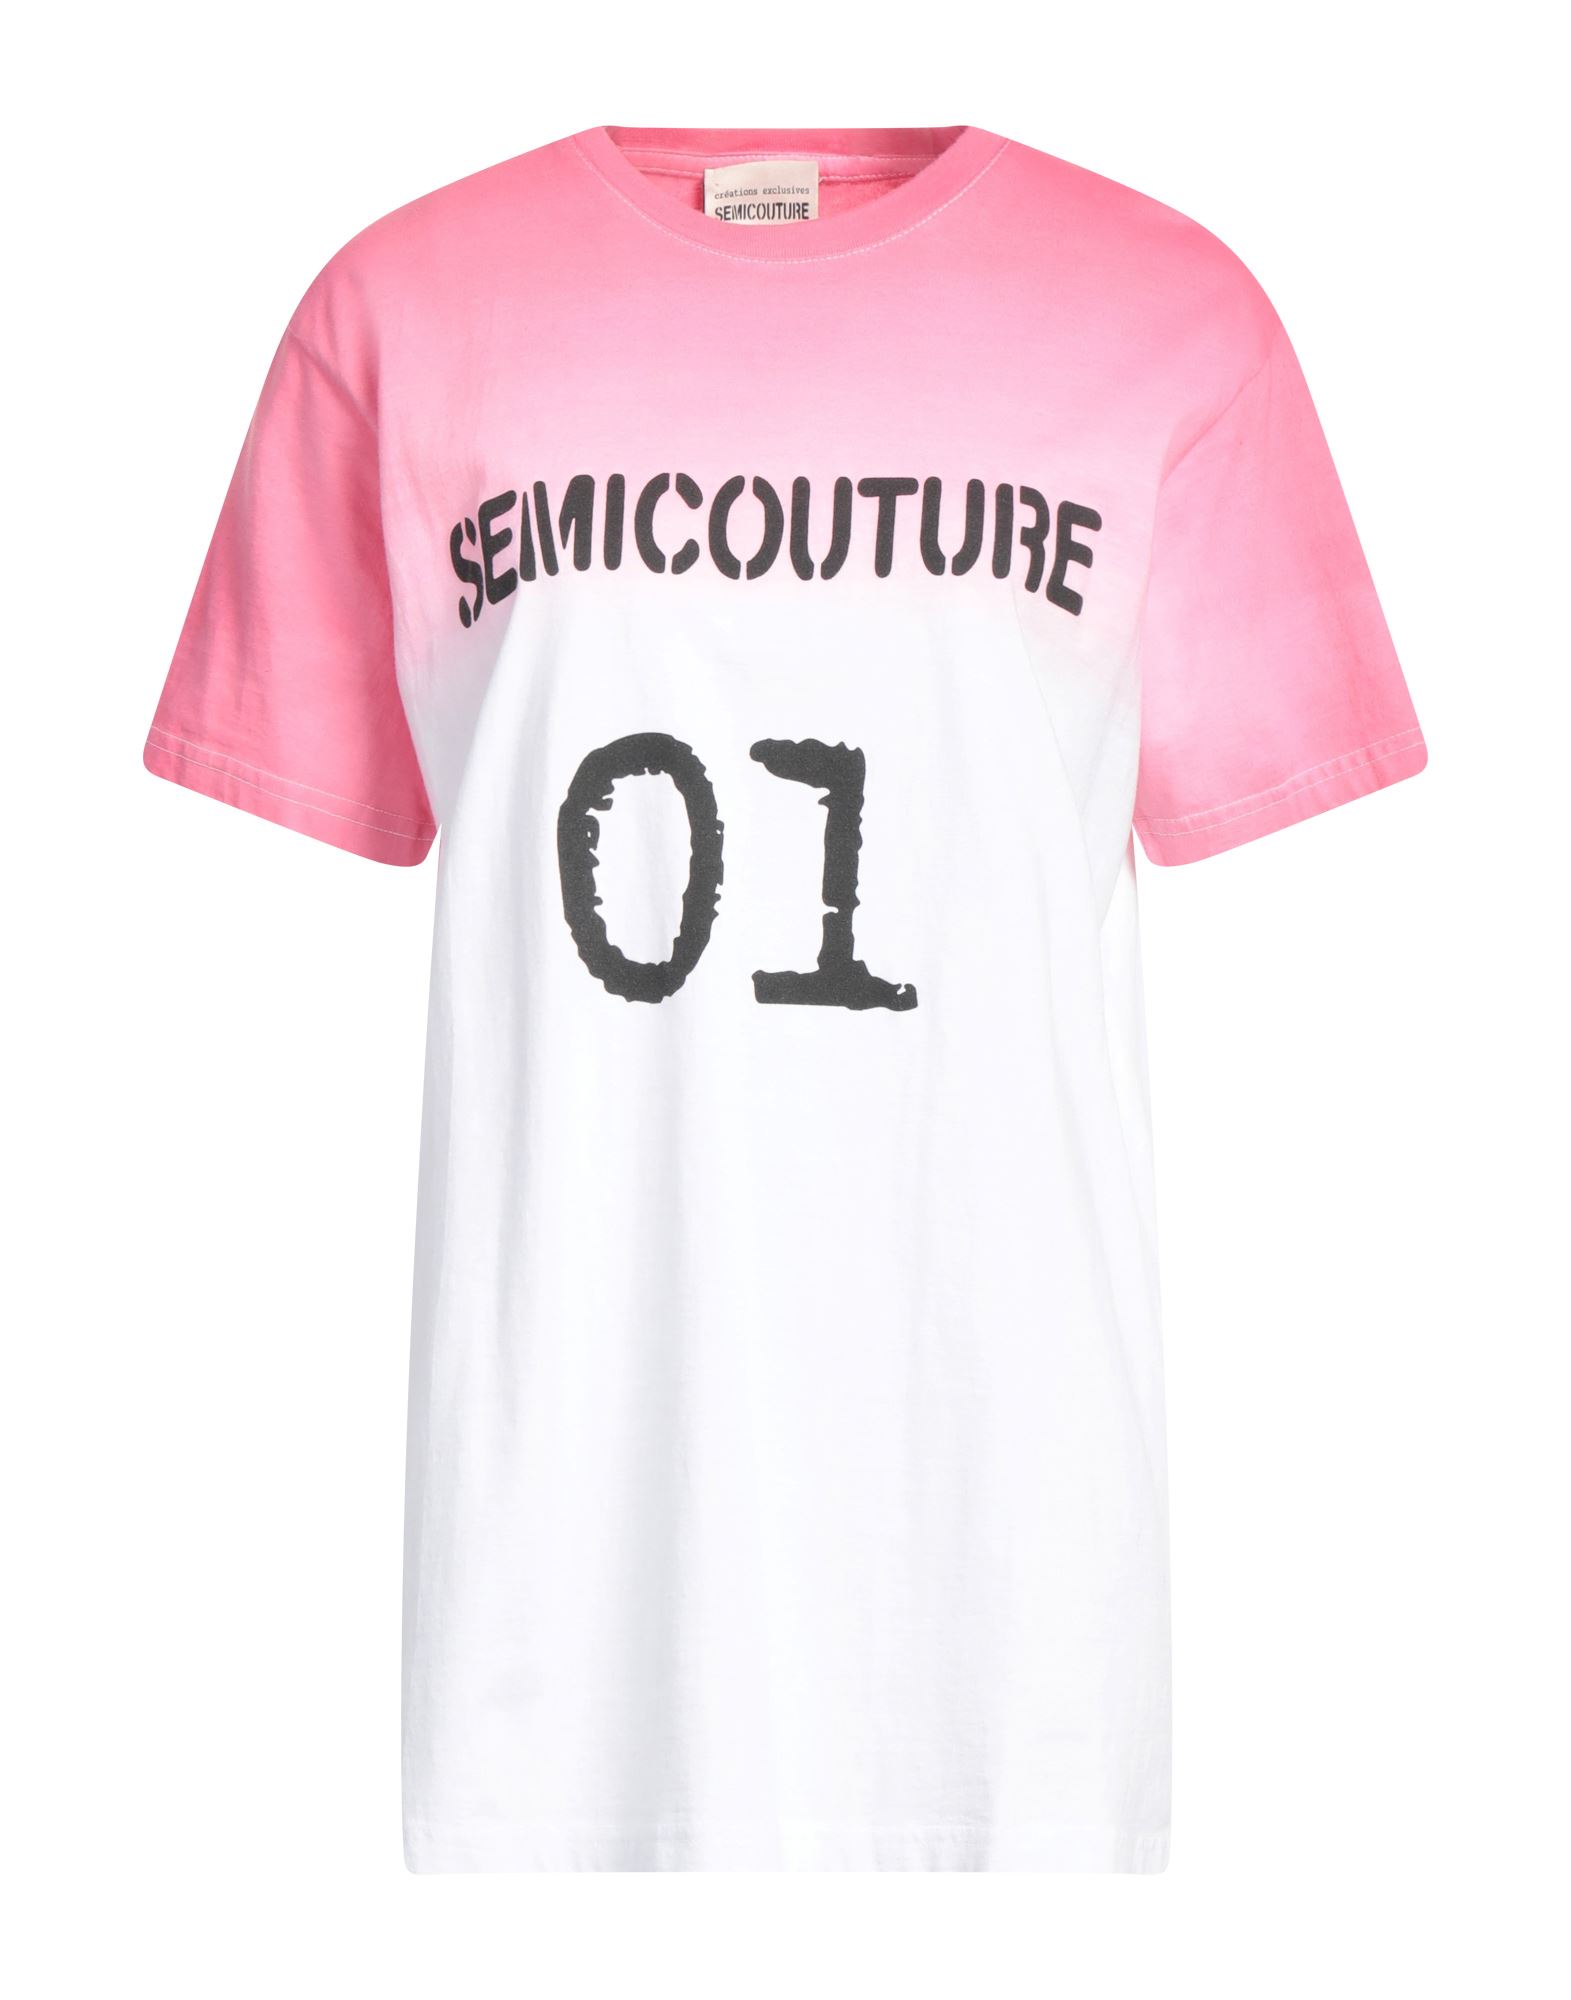 SEMICOUTURE T-shirts Damen Rosa von SEMICOUTURE